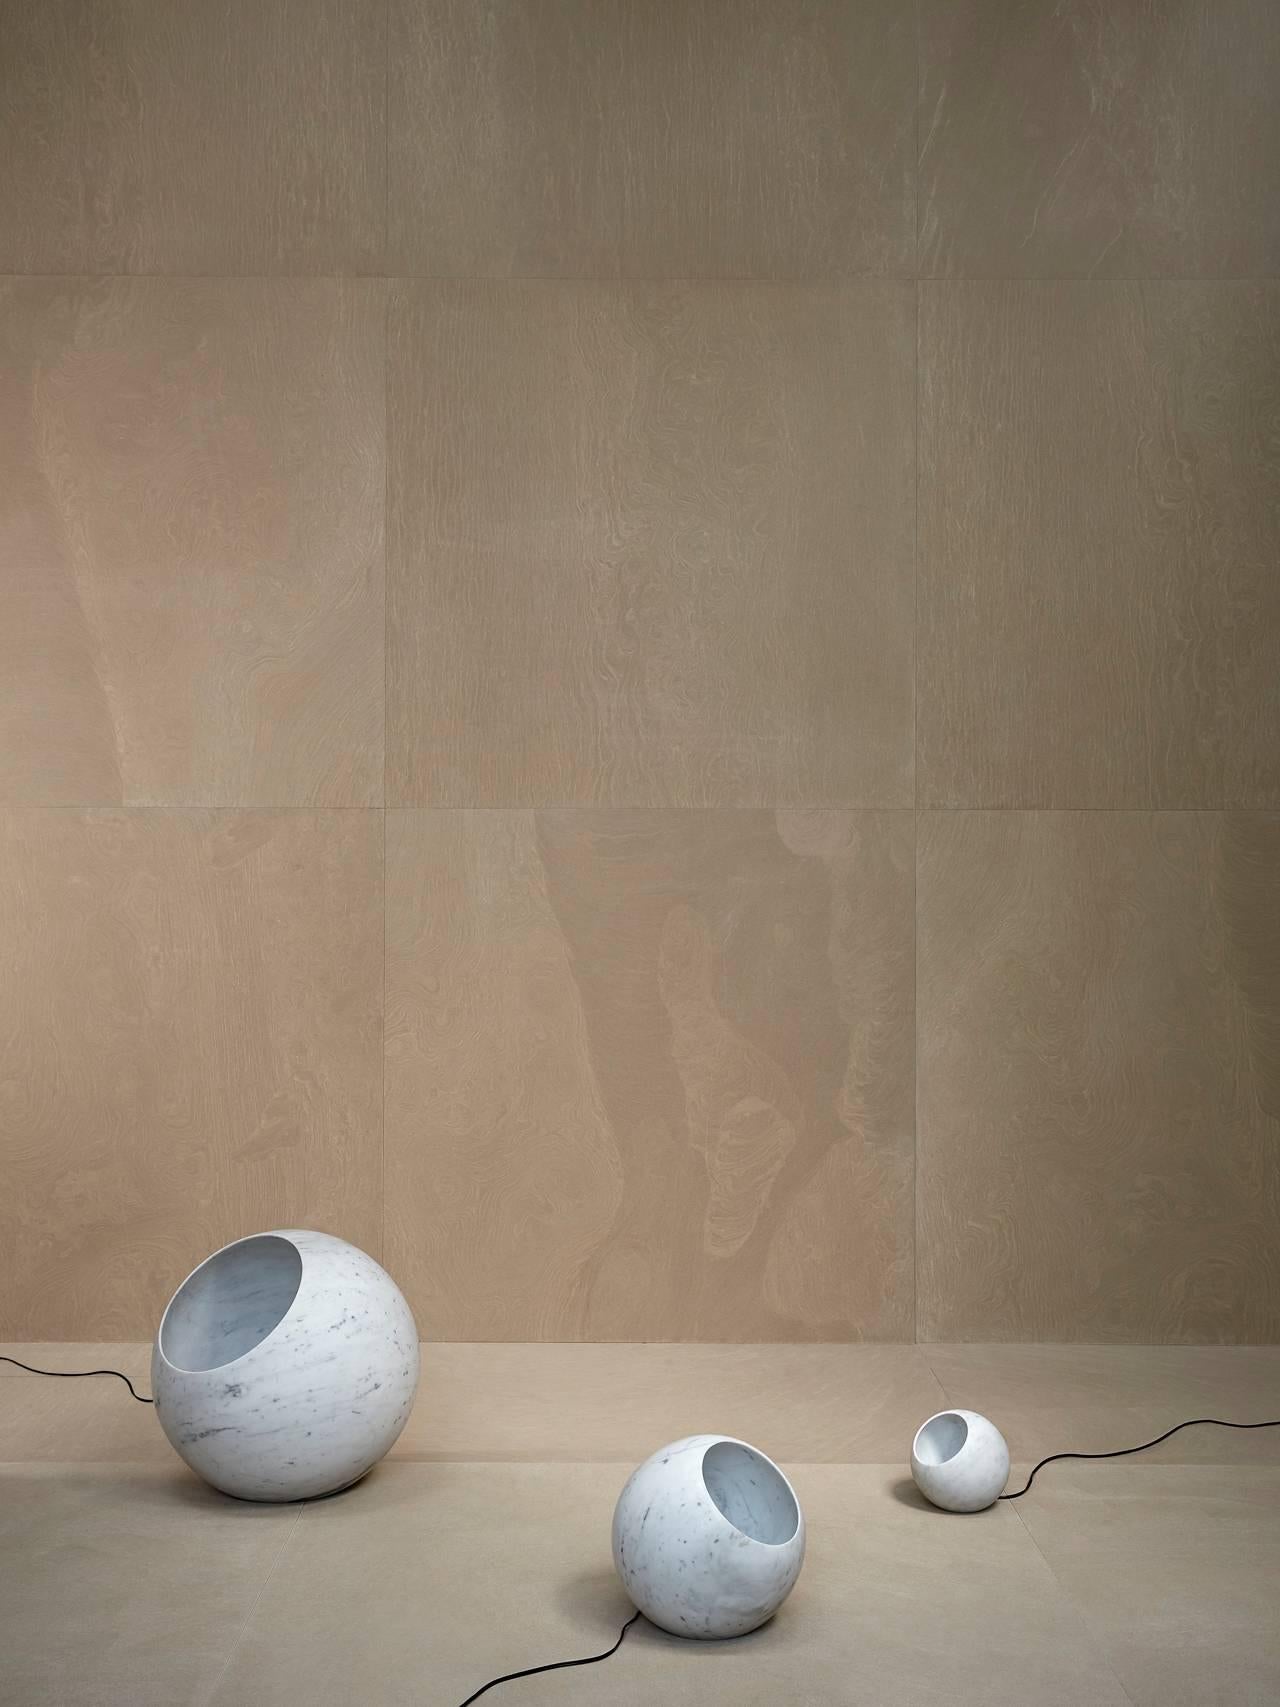 Salvatori Urano Spherical Floor Lamp 50 in Bianco Carrara Marble by Elisa Ossino For Sale 4